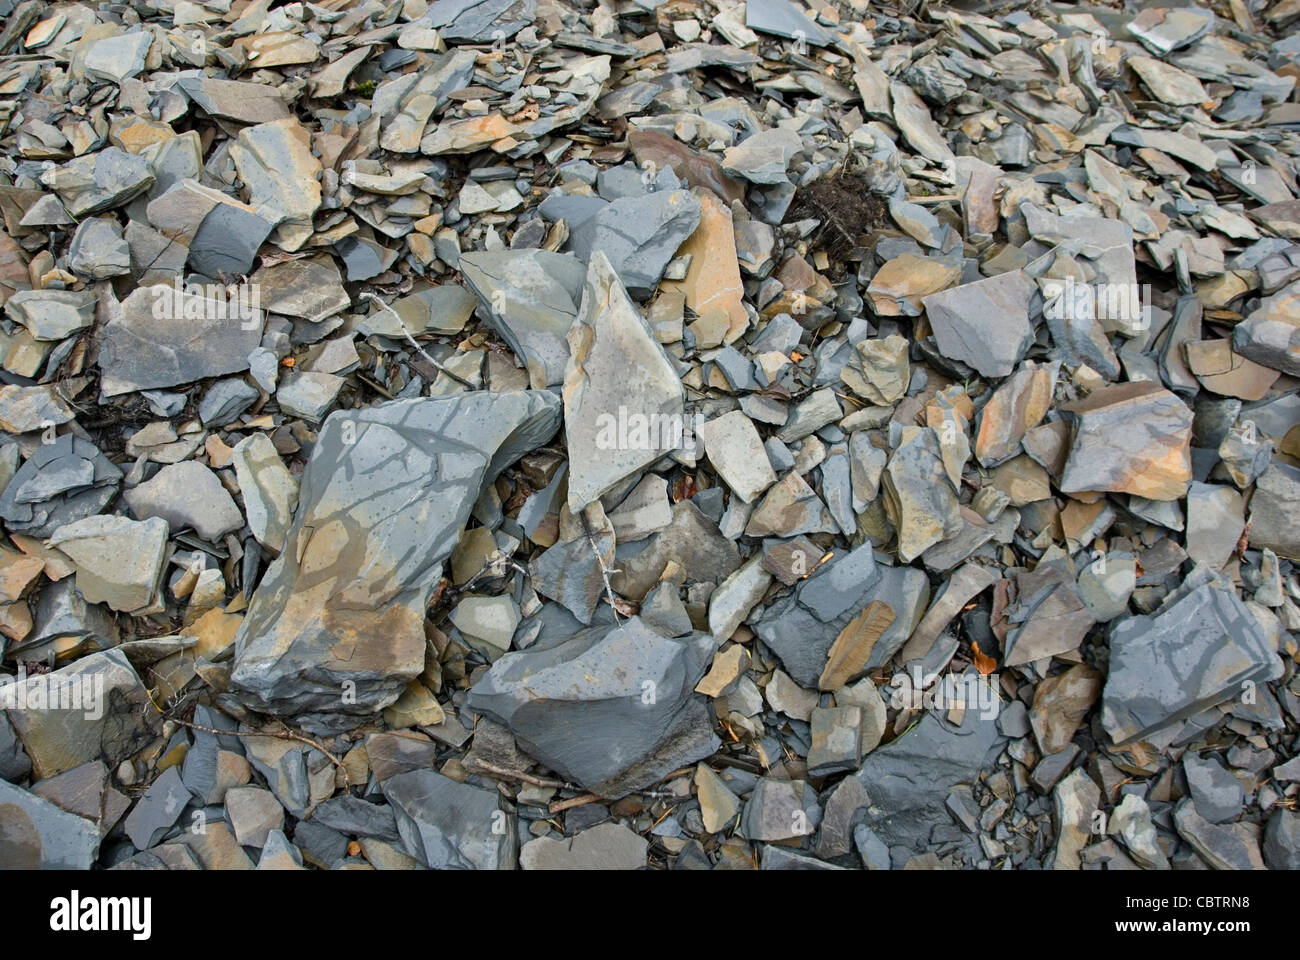 https://c8.alamy.com/comp/CBTRN8/subtle-colours-of-sharp-slate-rocks-littering-the-ground-background-CBTRN8.jpg